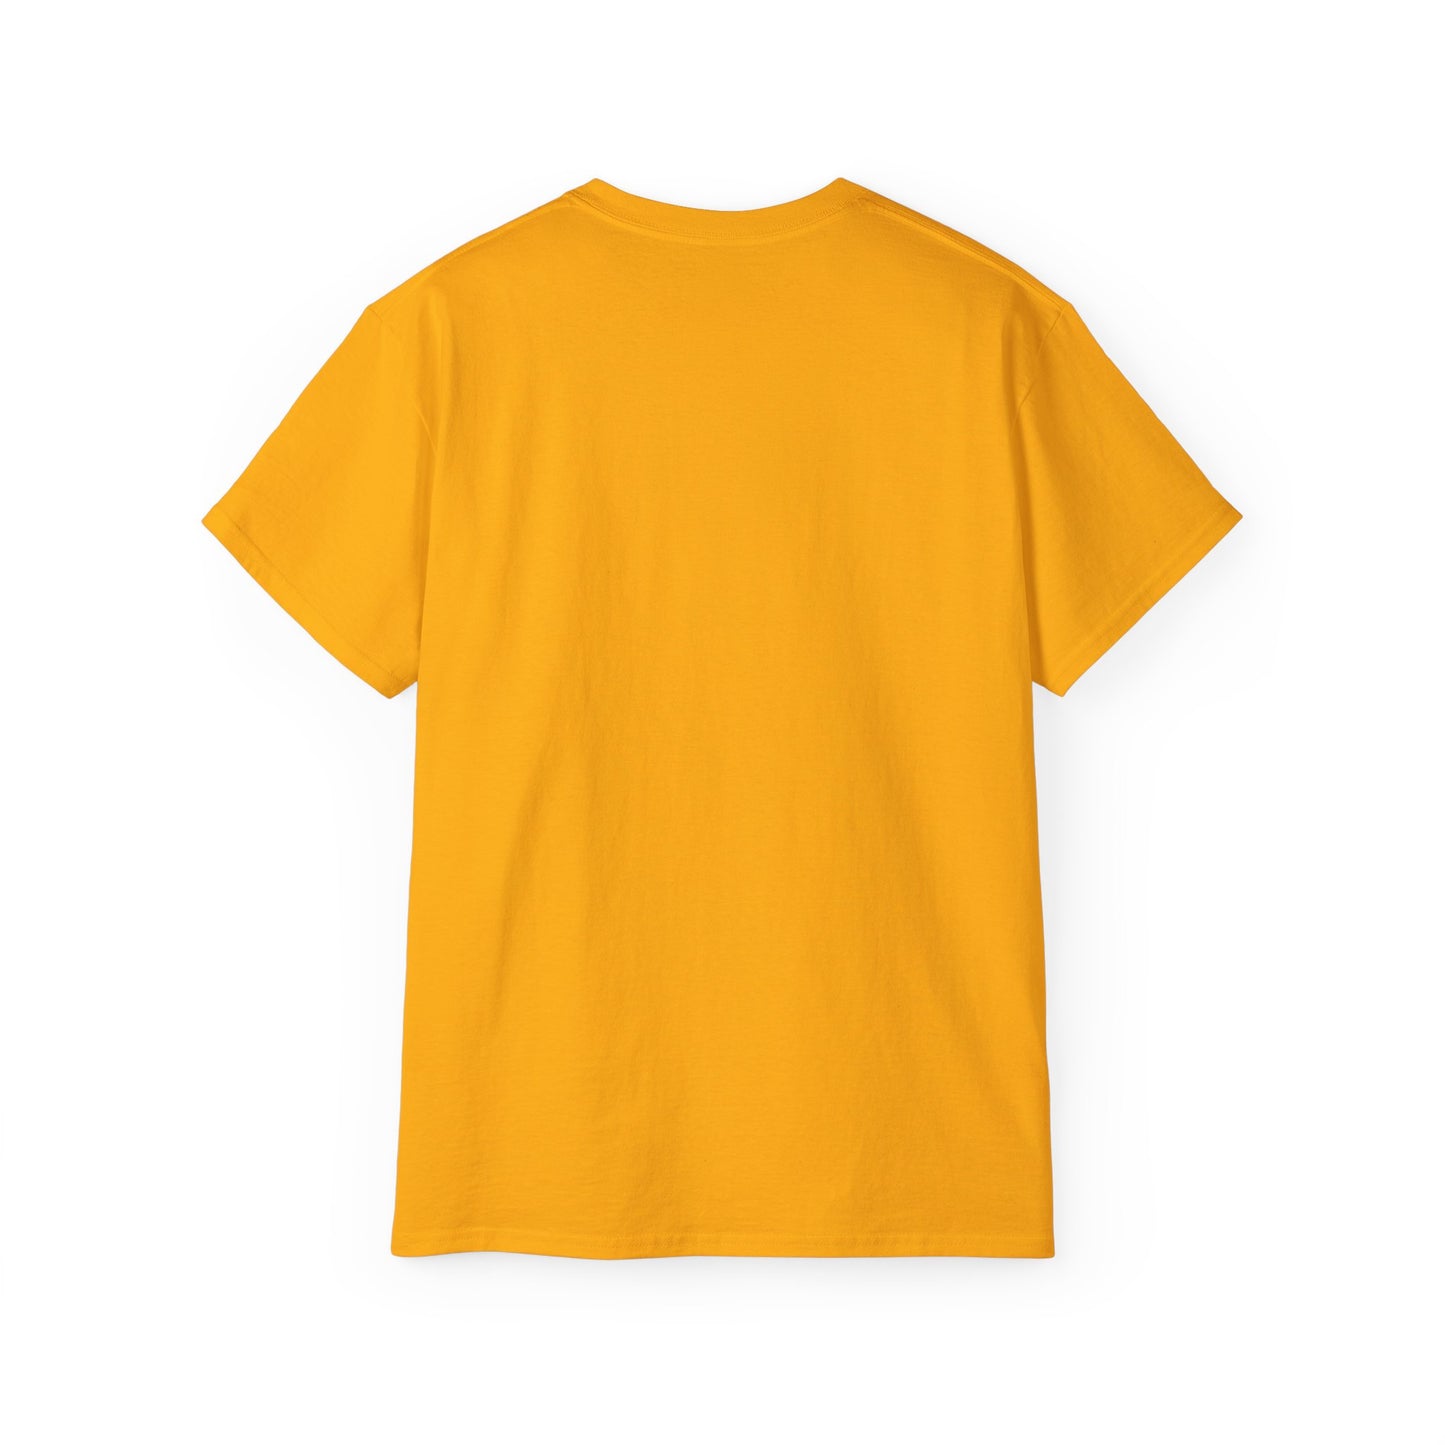 Broncos-Apparel Sweetheart’s - Unisex t-shirt